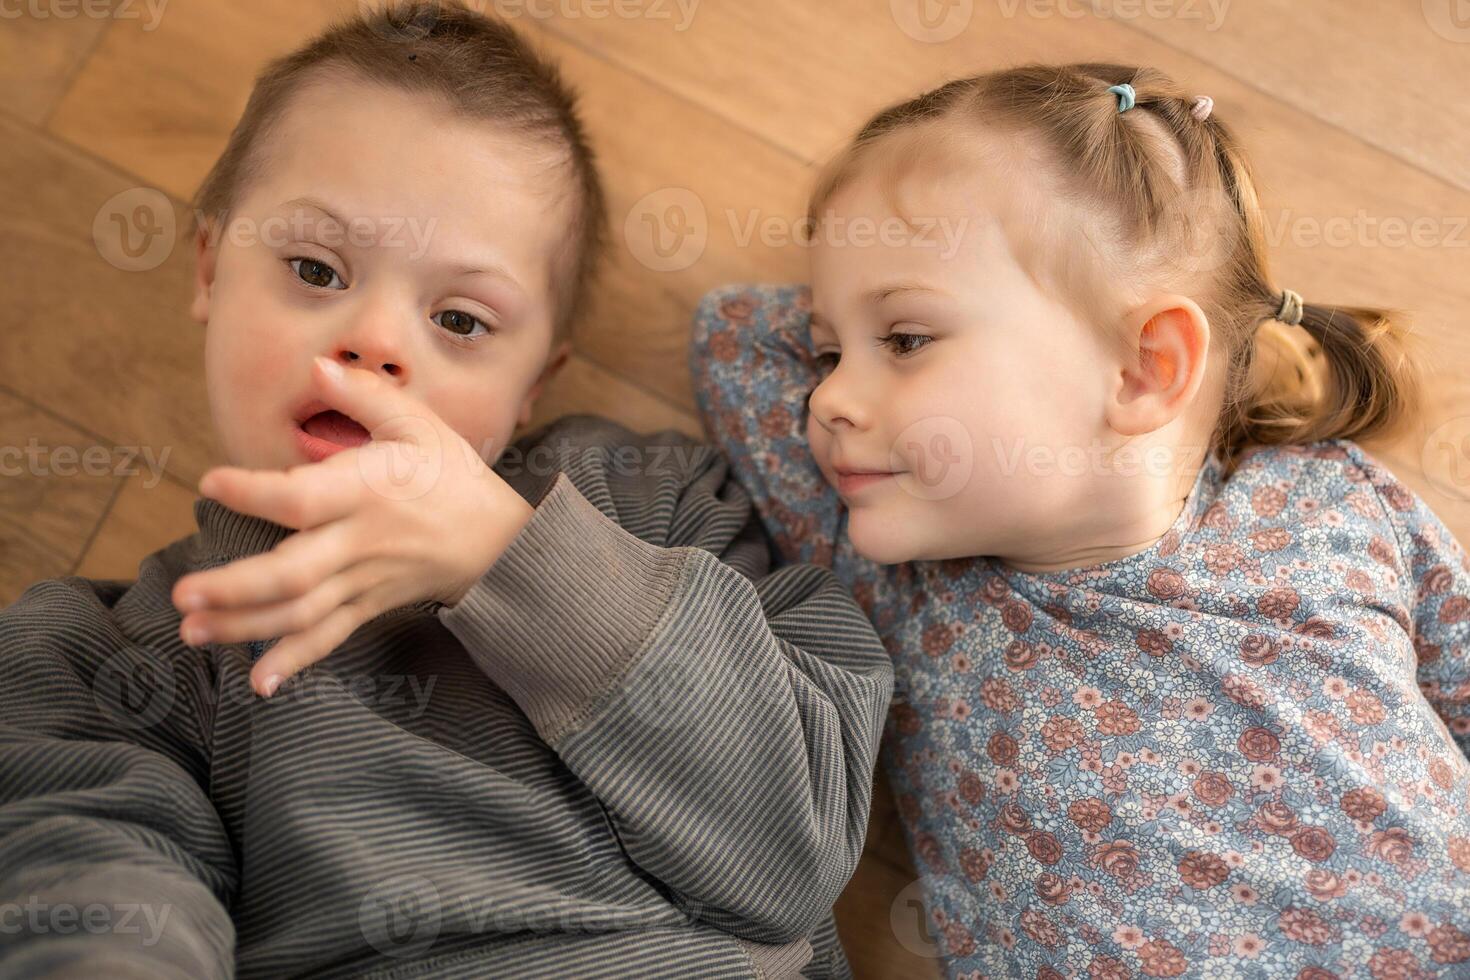 små pojke med ner syndrom spelar med hans yngre syster i Hem sovrum. hög kvalitet Foto